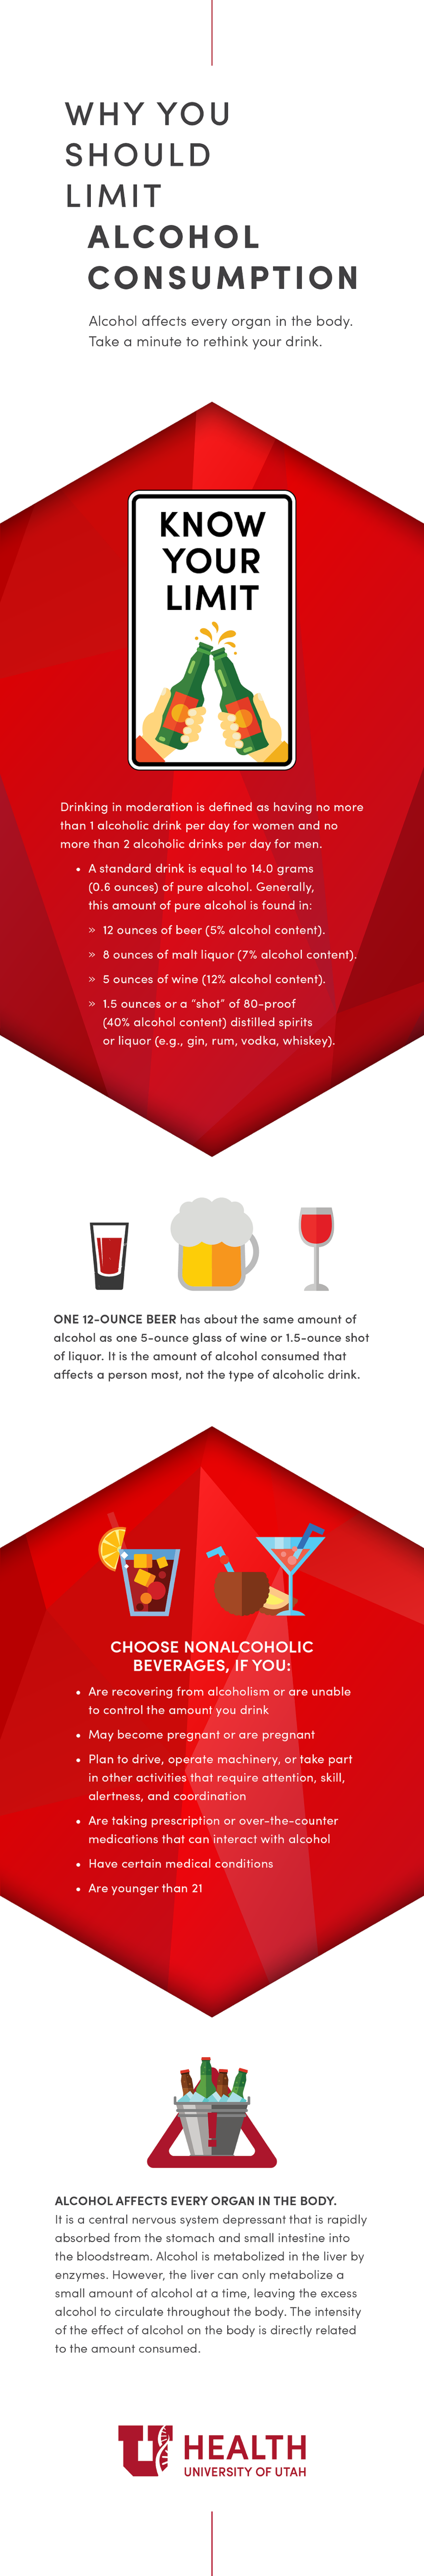 Alcohol consumption graphic